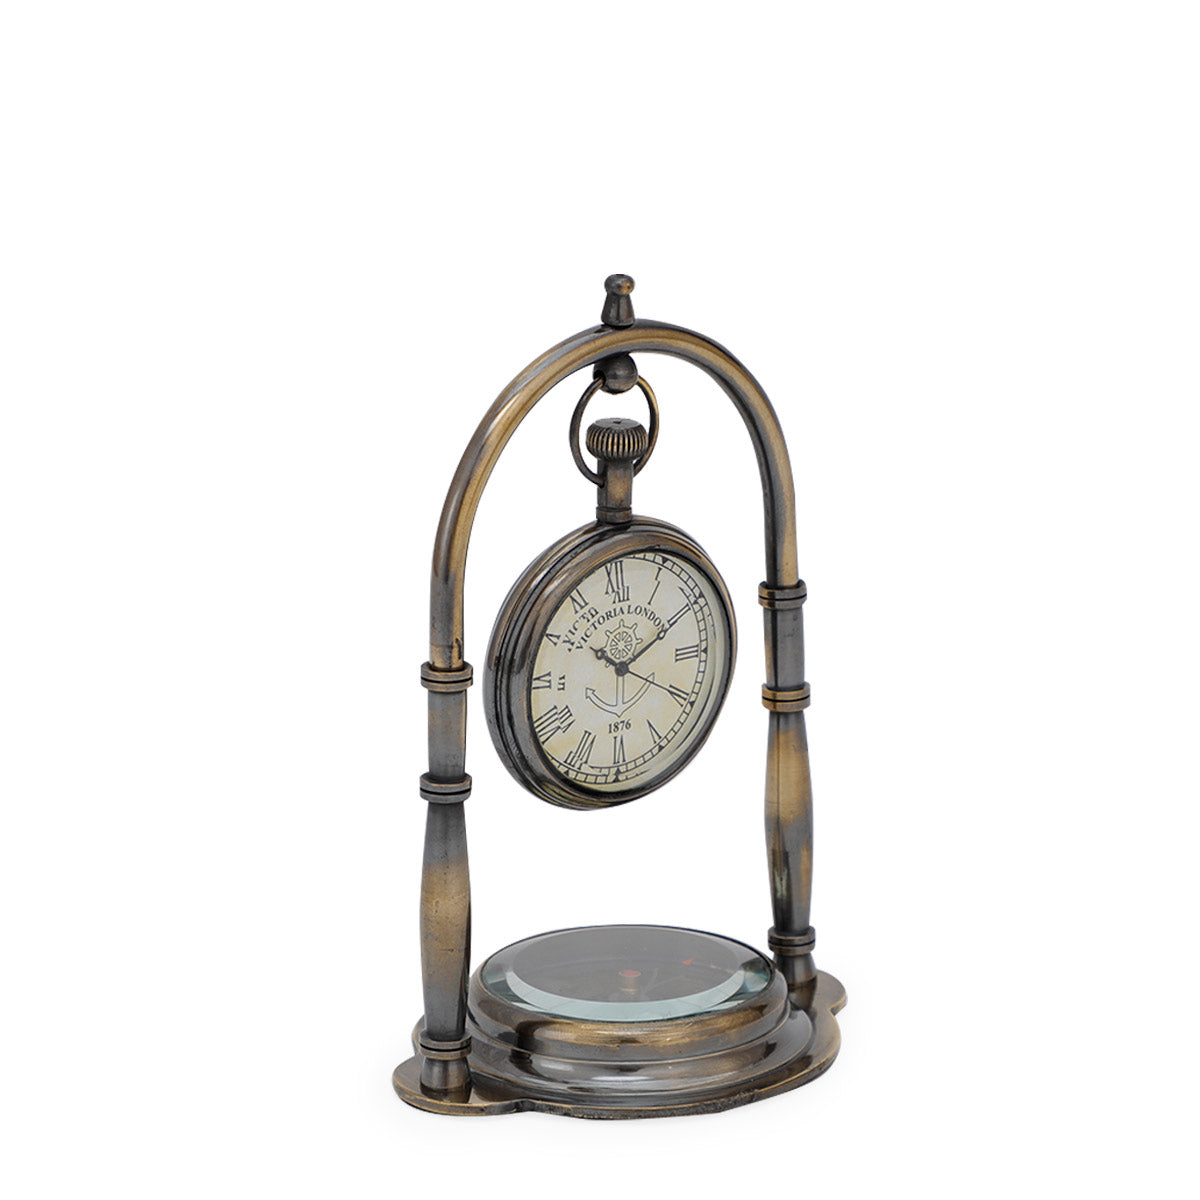 Viona Hanging Table Clock